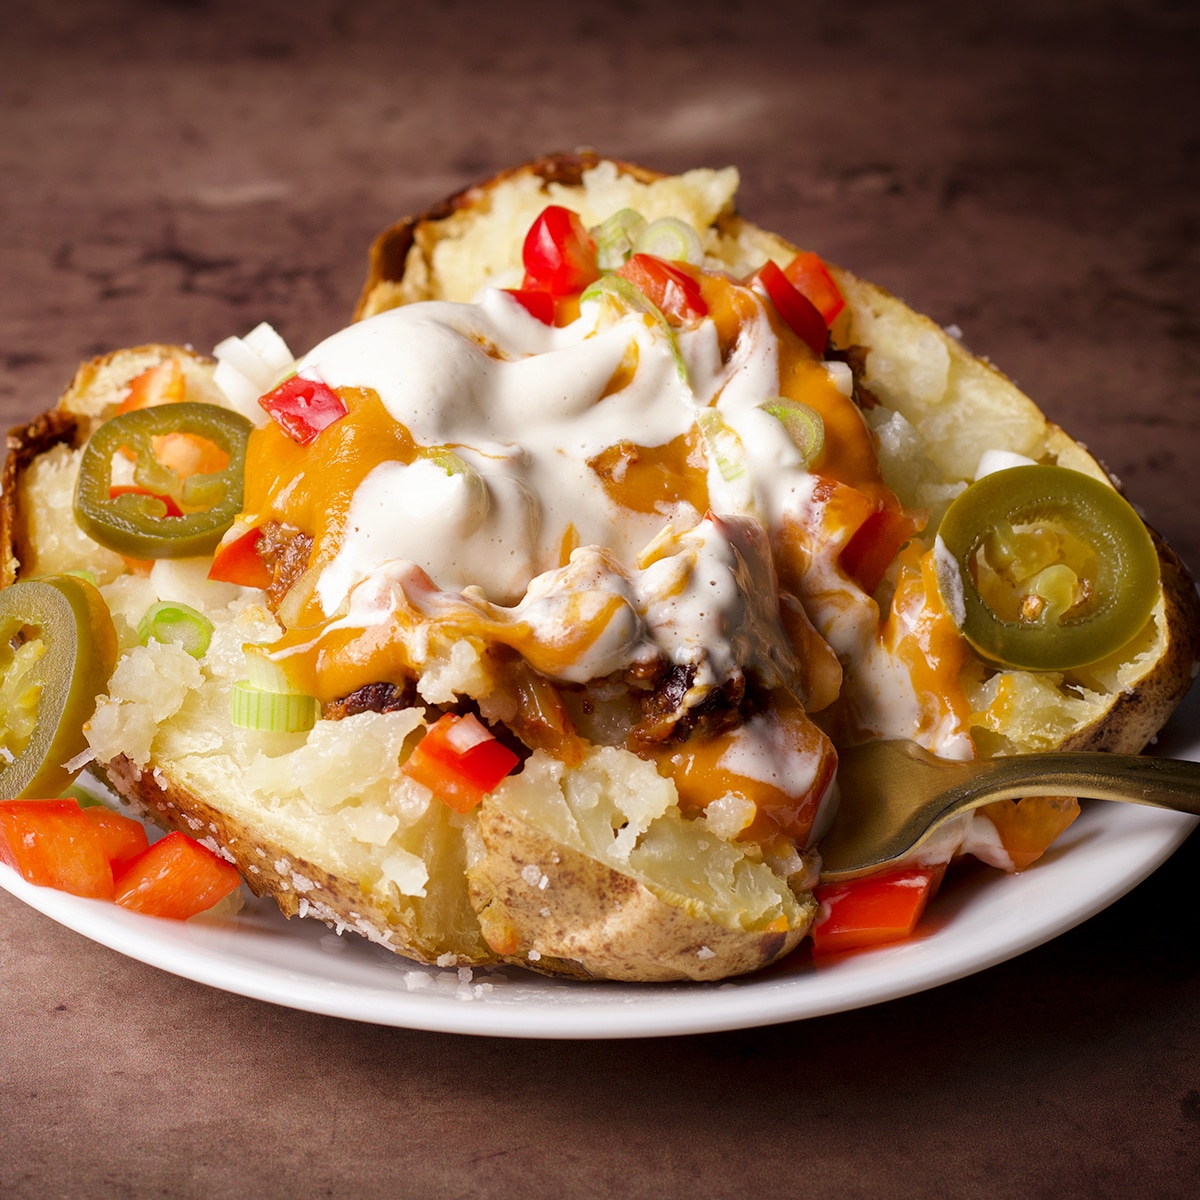 A baked potato loaded with vegan taco meat, vegan nacho cheese sauce, vegan sour cream, and chopped veggies.